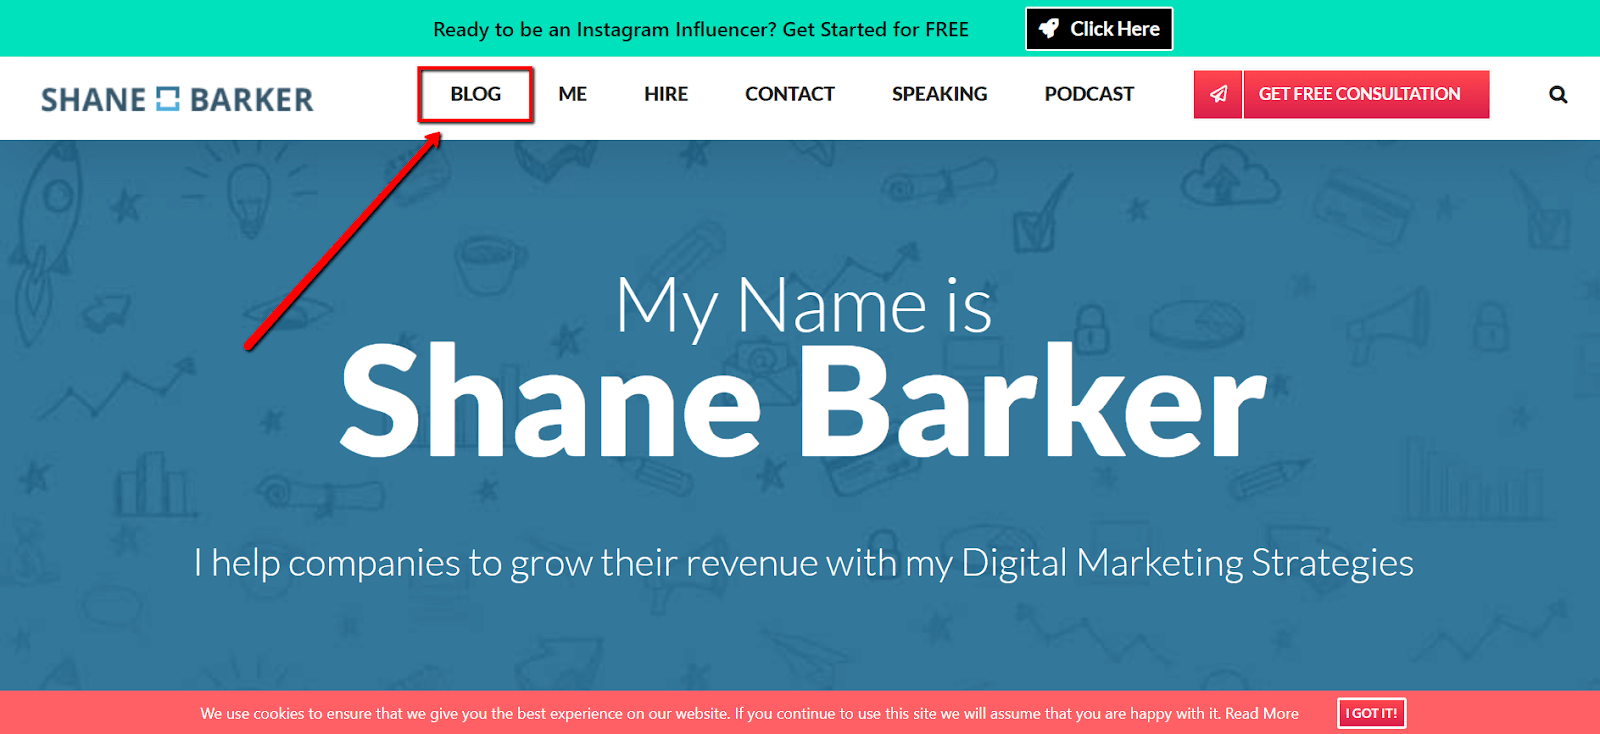 shane barker - blog content